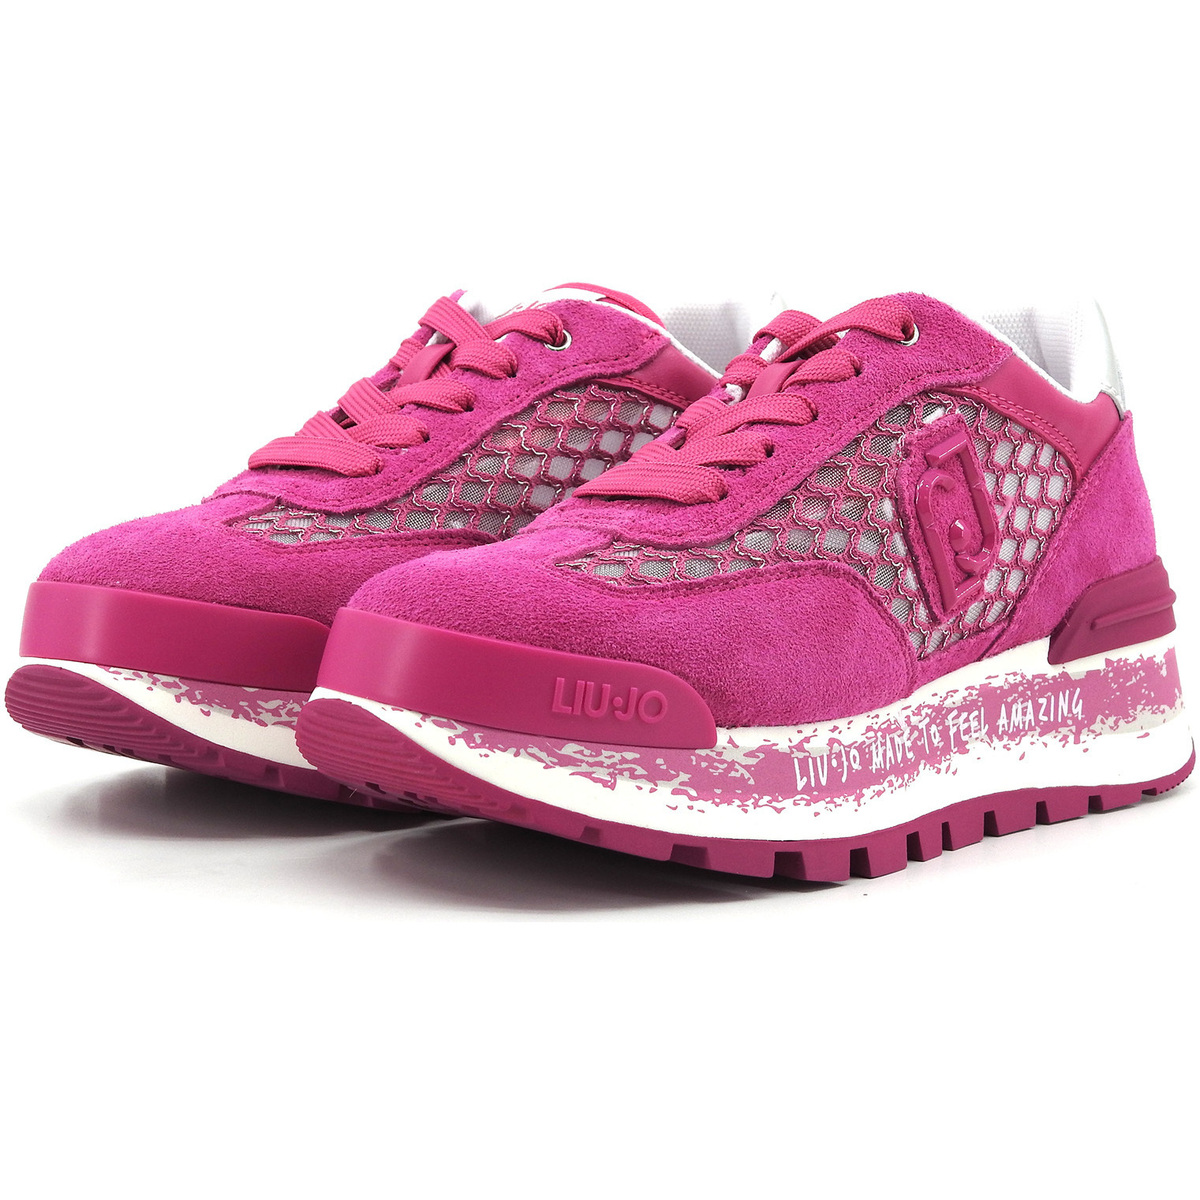 Liu Jo Rose Amazing 23 Sneaker Donna Pink Silver BA4001PX303 F56euwEd